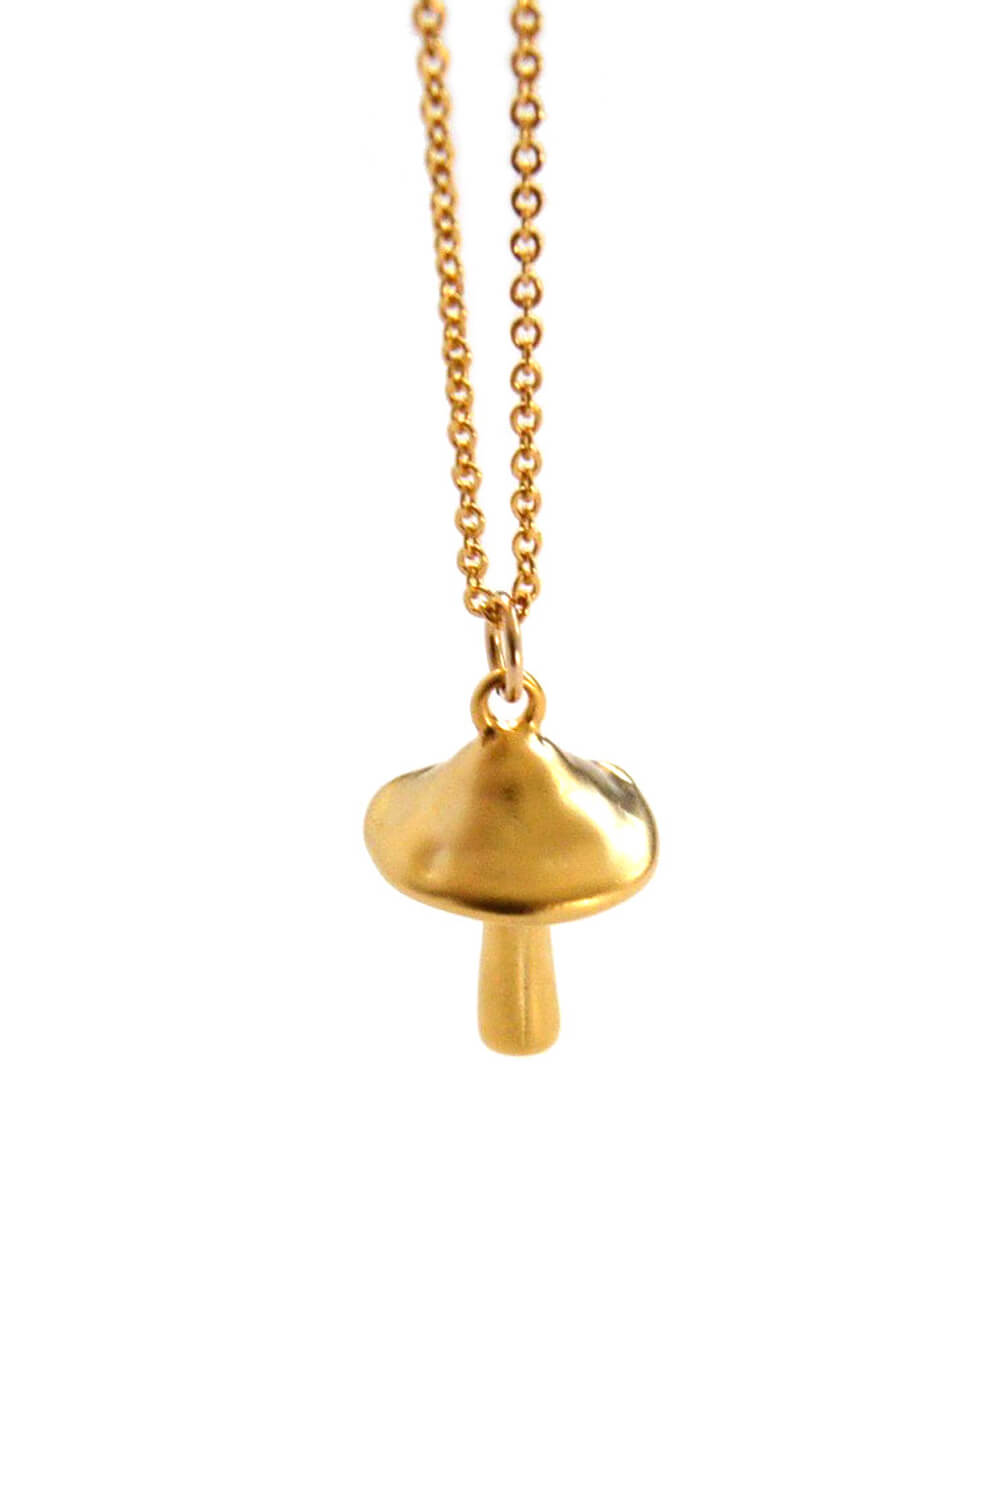 mushroom necklace - gold